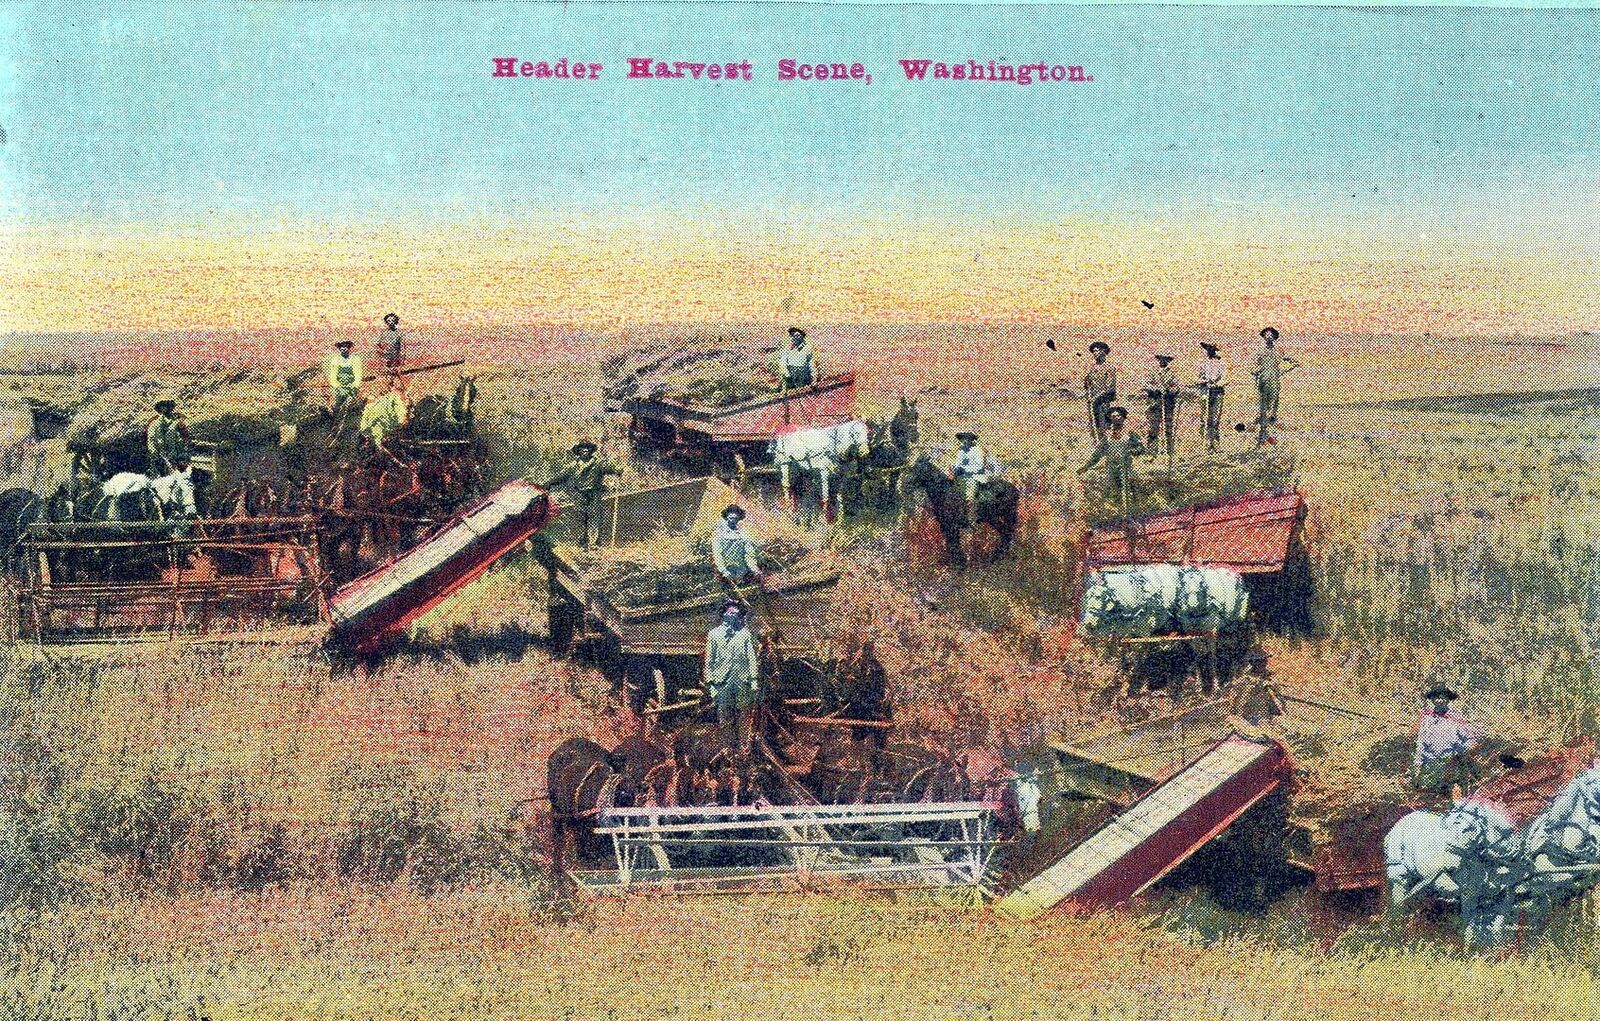 WASHINGTON WA - Header Harvest Scene Postcard